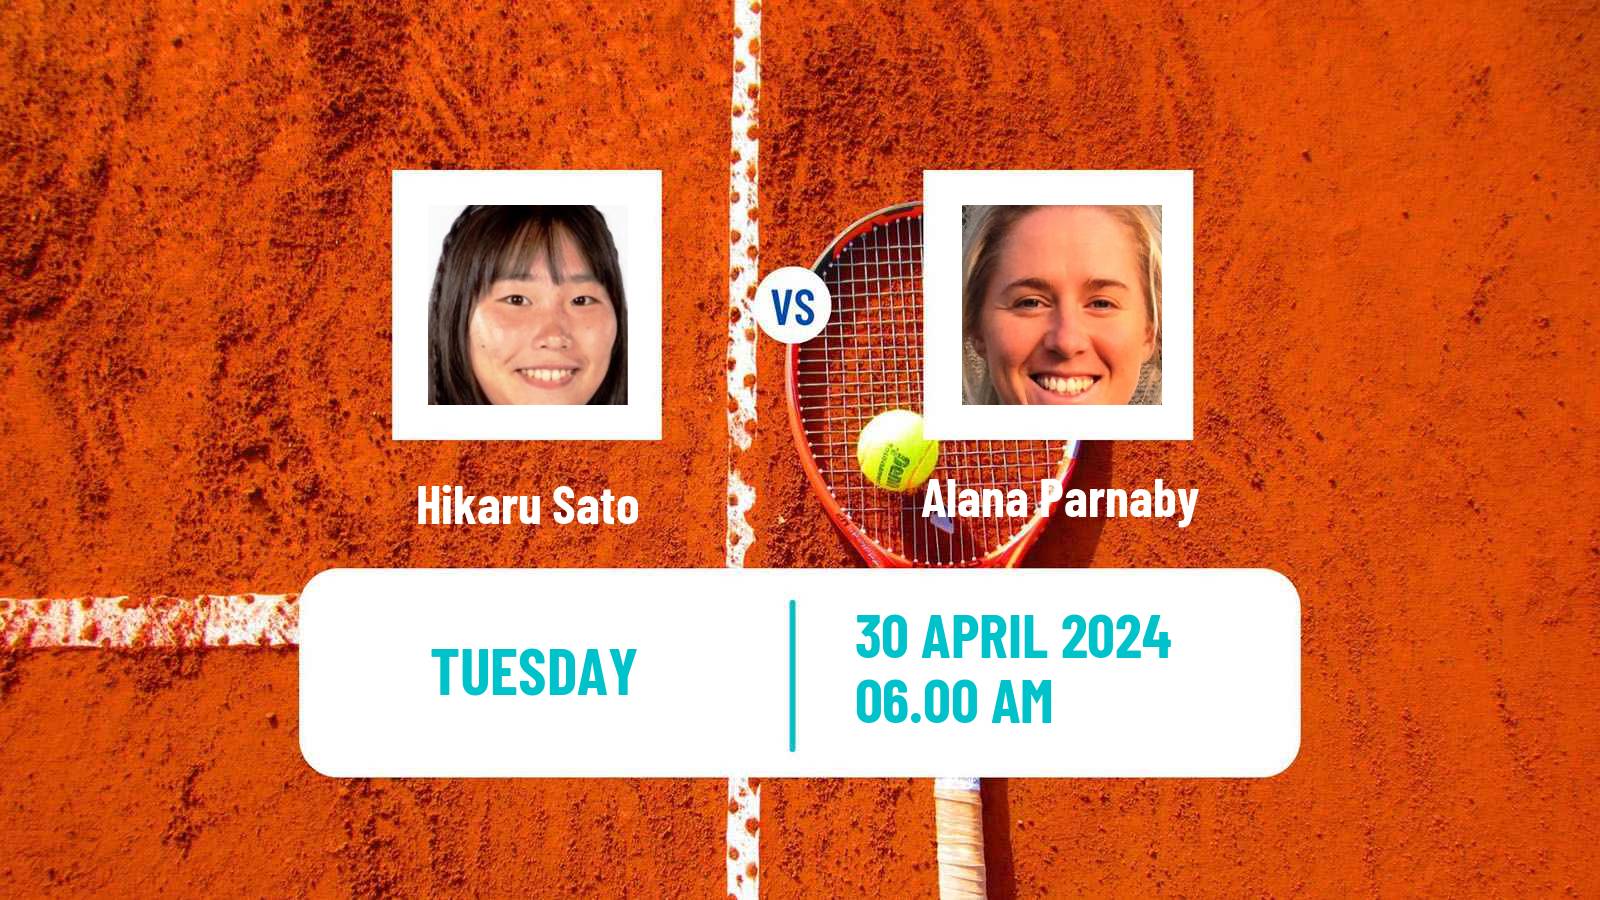 Tennis ITF W35 Nottingham 2 Women Hikaru Sato - Alana Parnaby